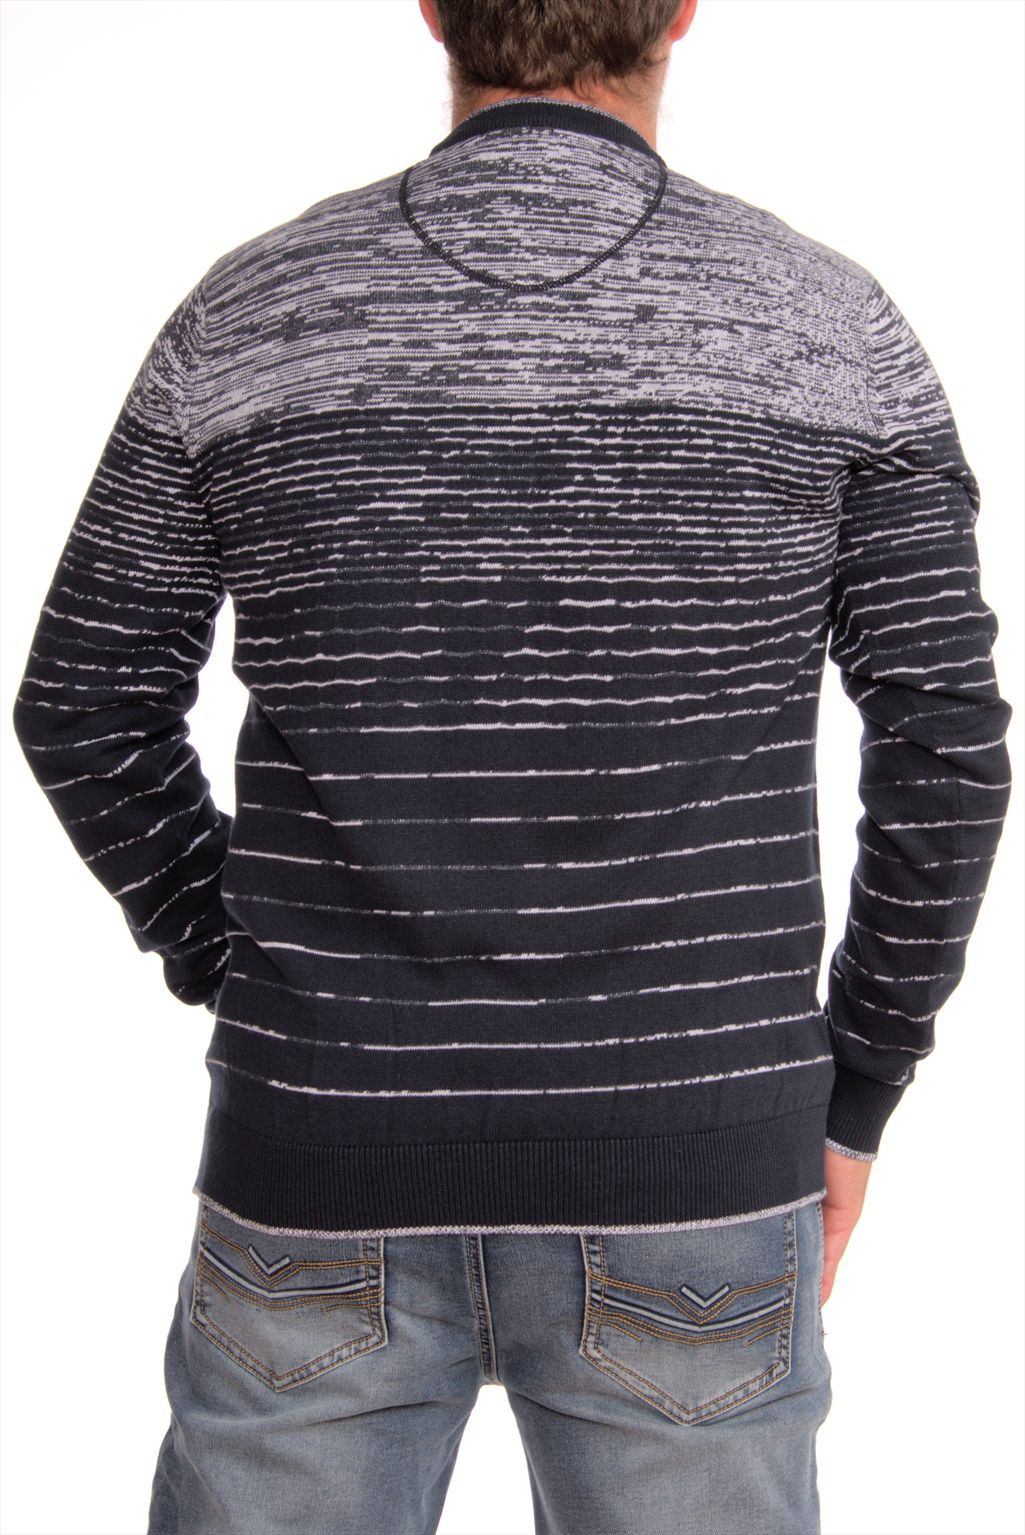 Long sleeve Sweater